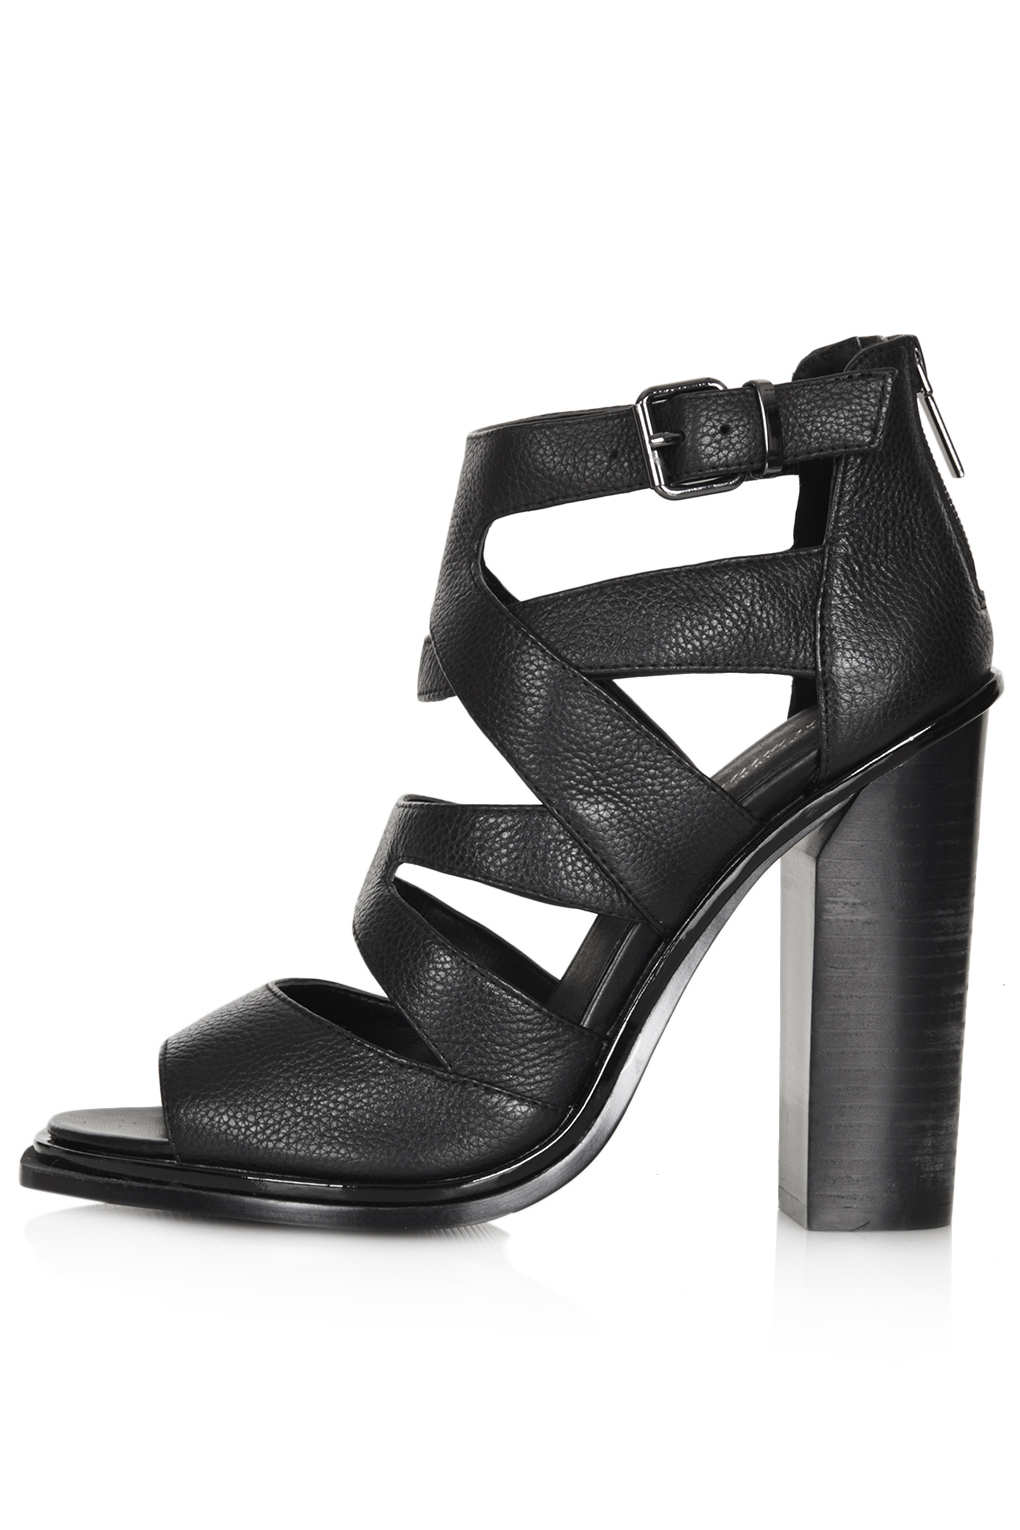 black multi strap heels